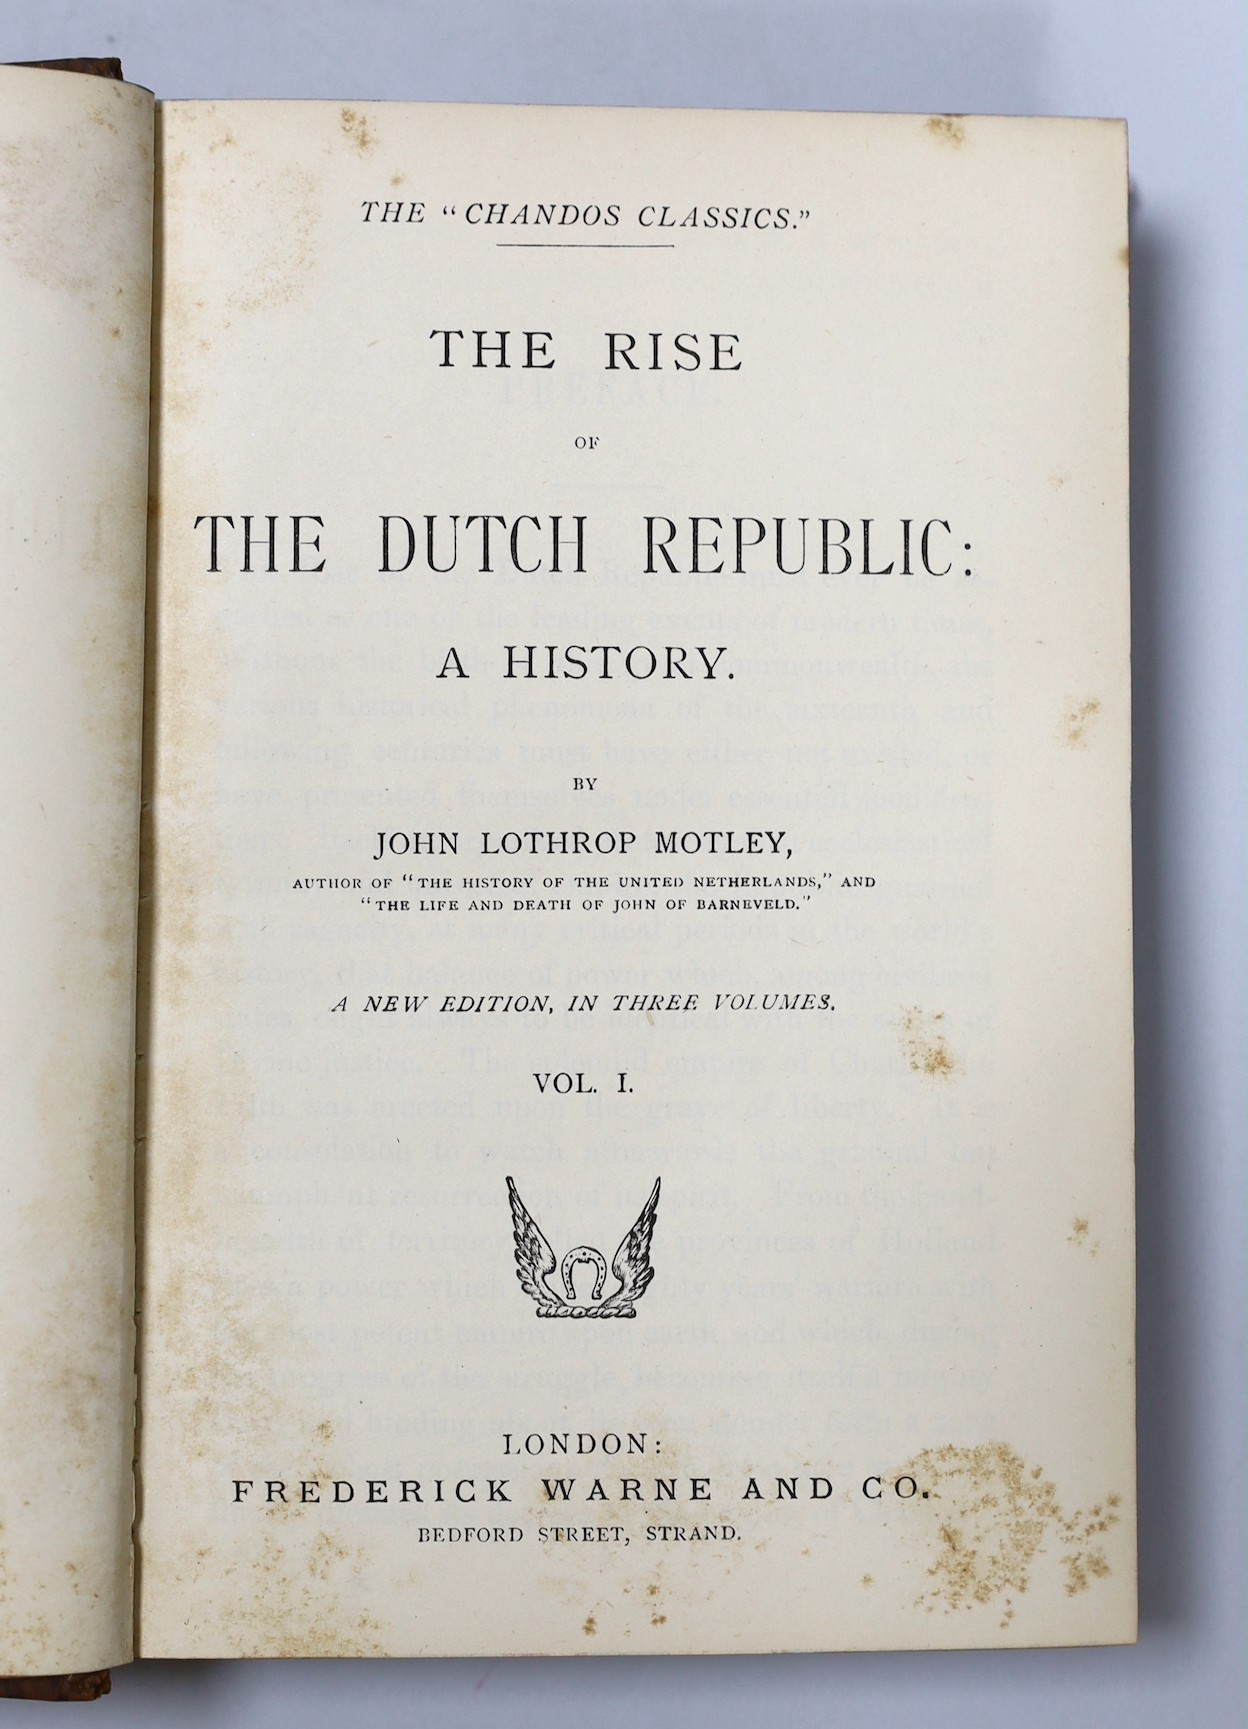 Motley, John Lothrop - The Dutch Republic, 3 vols, 8vo,half calf, with Rider Haggard calling pasted to flyleaf, Frederick Warne & Co., London, c. 1895